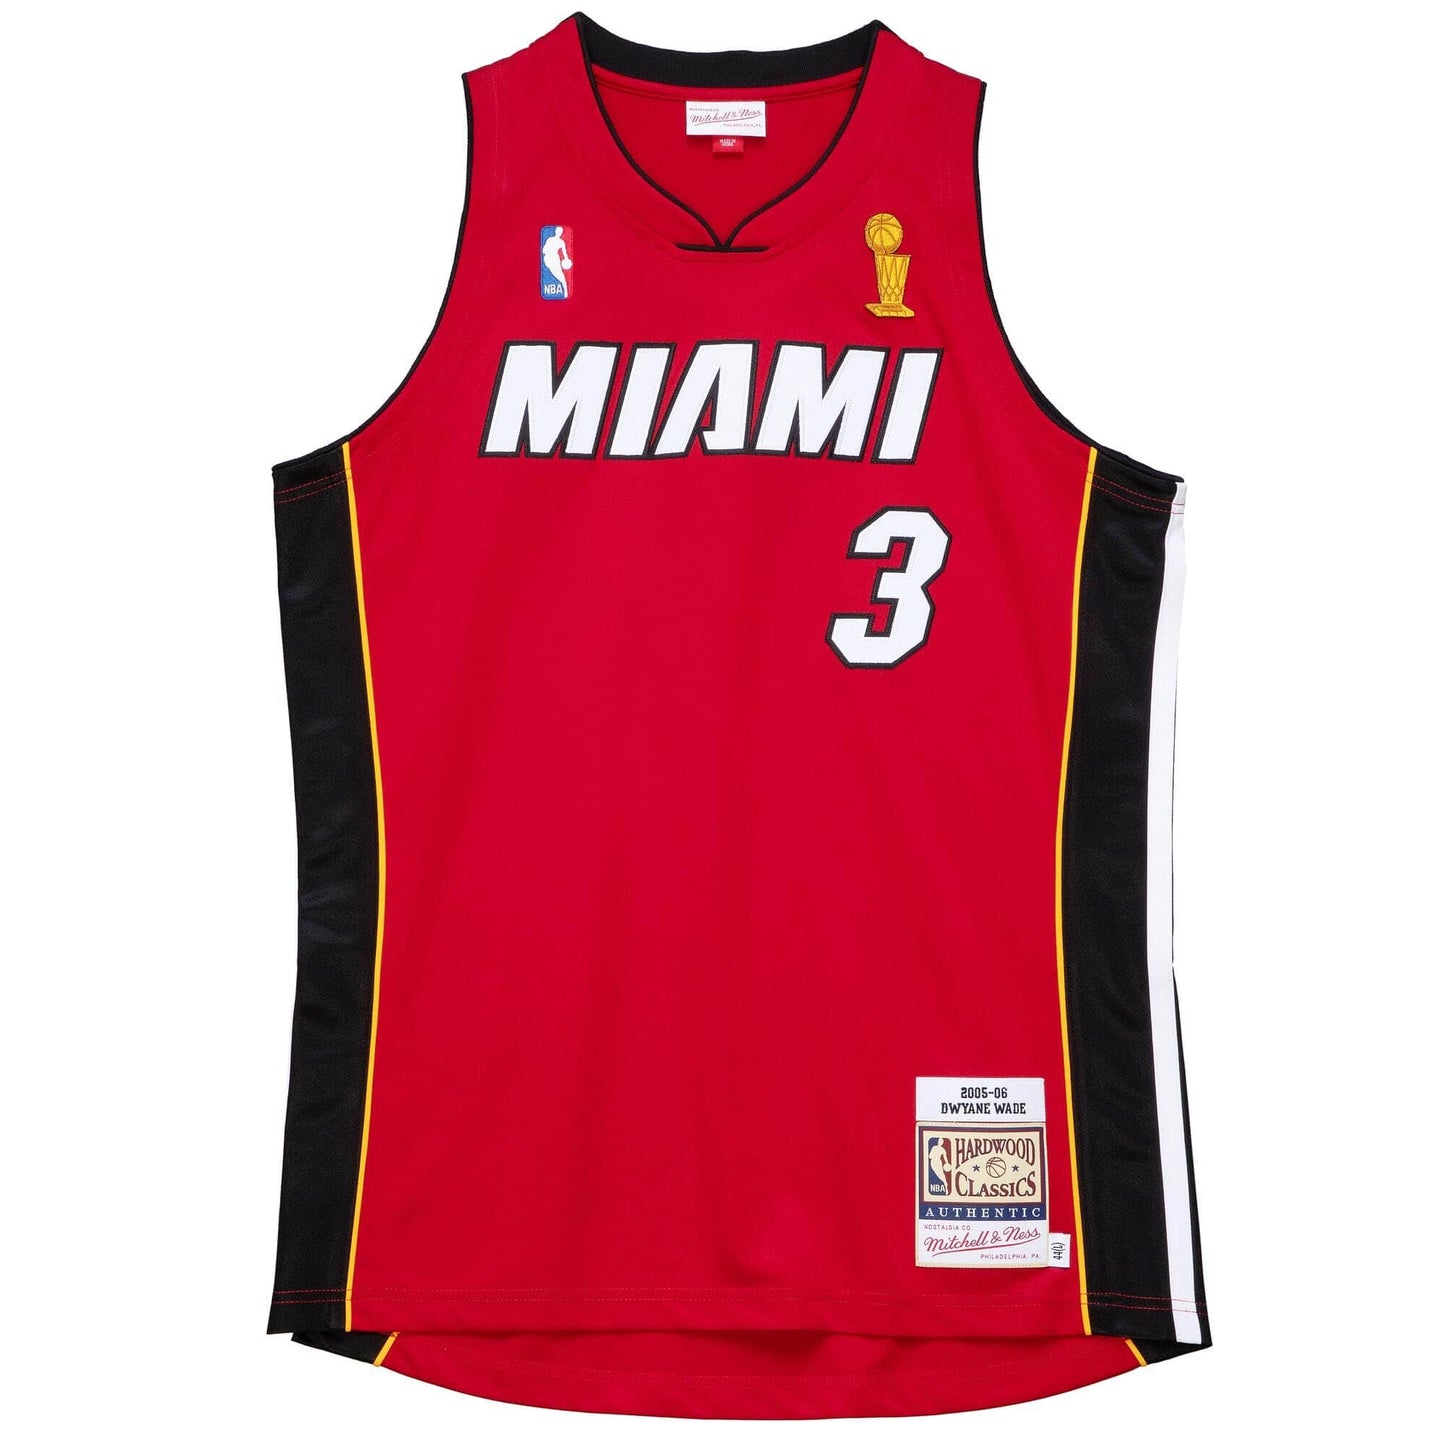 Authentic Dwyane Wade Miami Heat Alternate 2005-06 Jersey